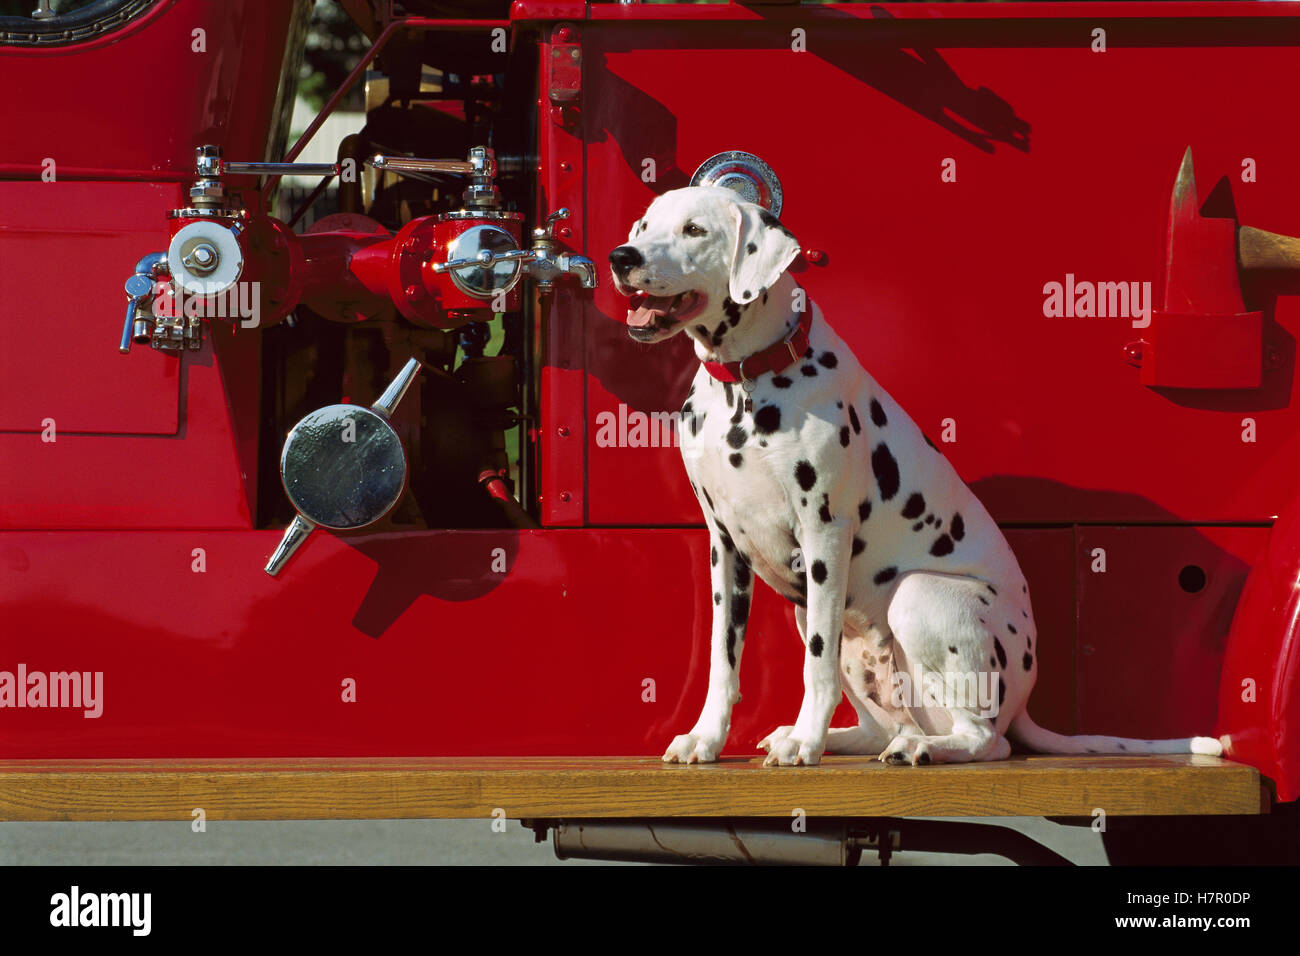 Dalmatian (Canis familiaris) on antique fire truck Stock Photo